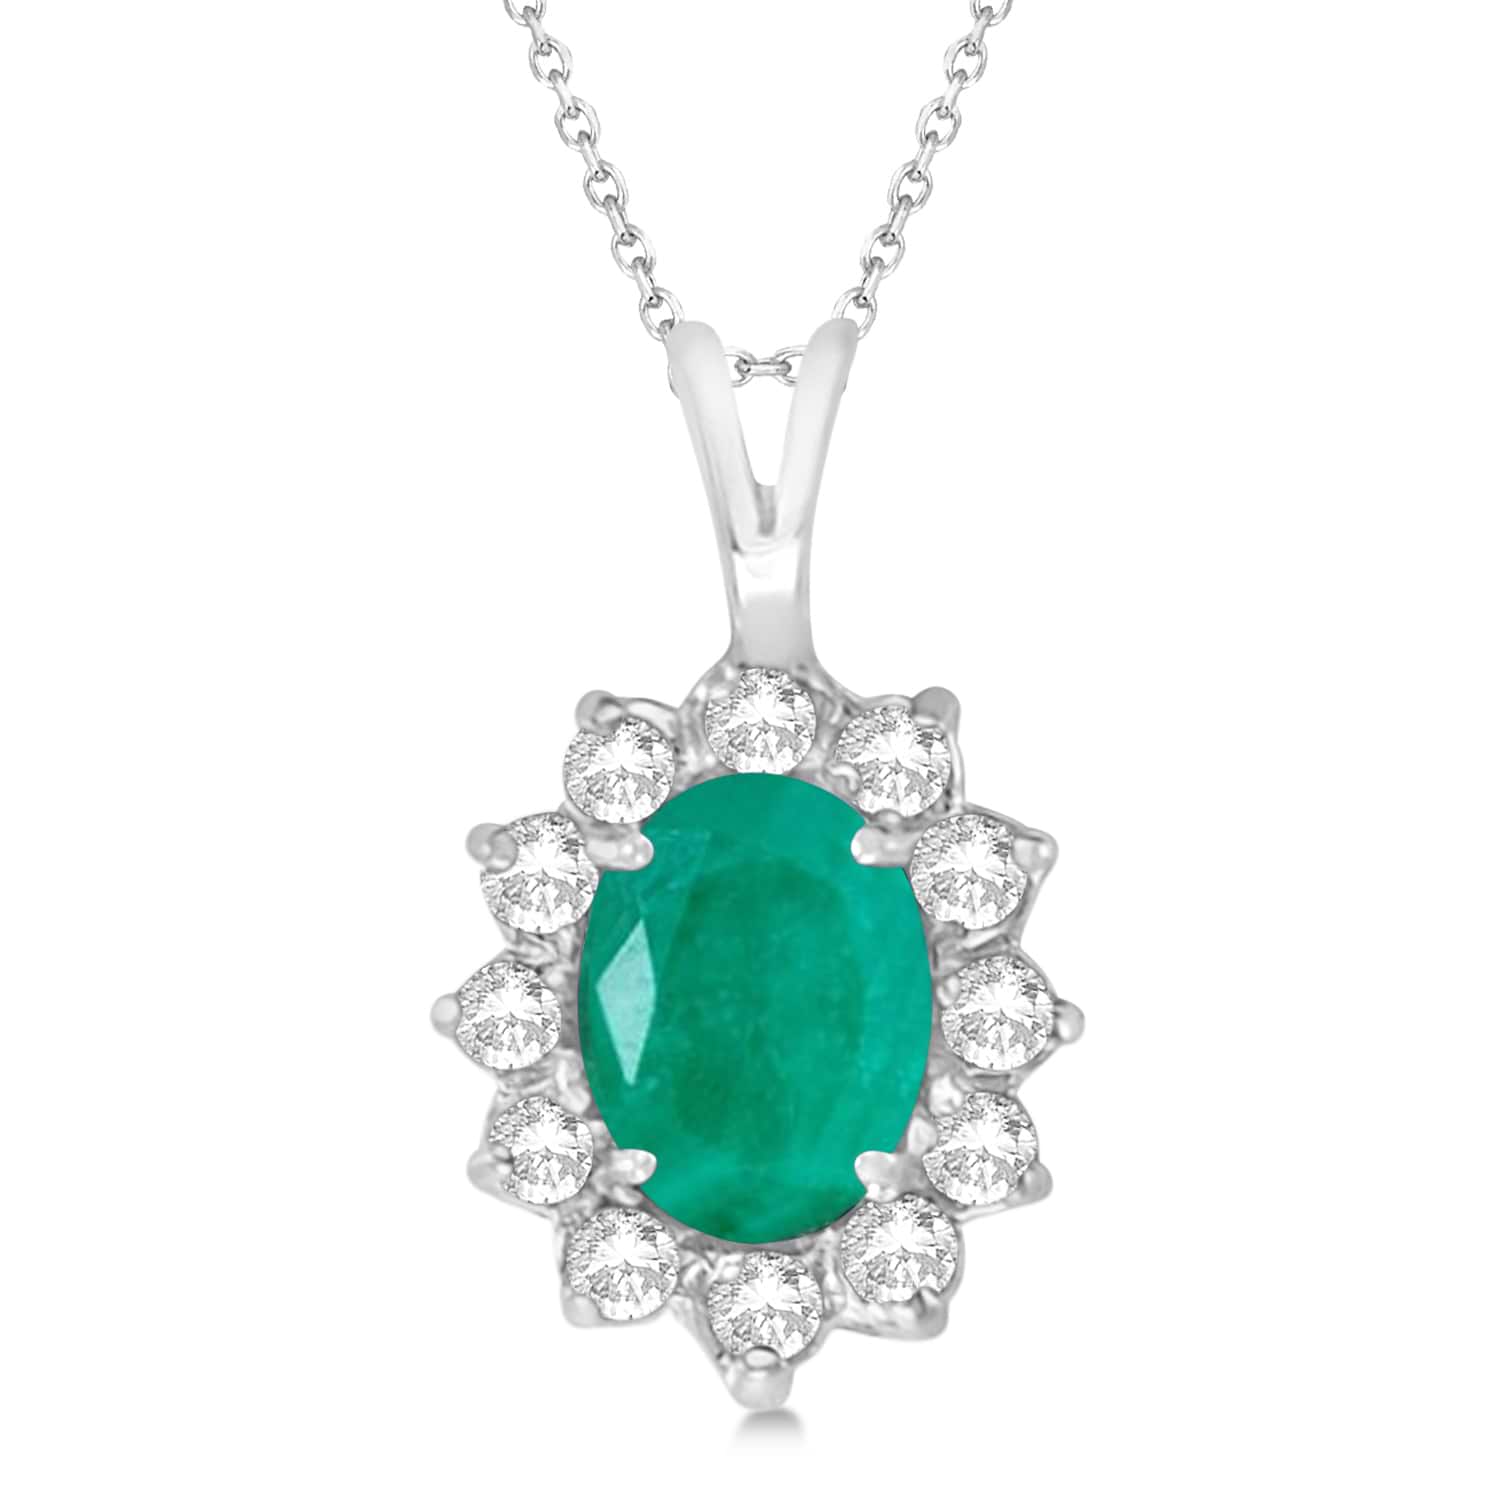 Emerald & Diamond Accented Pendant Necklace 14k White Gold (1.50ctw)